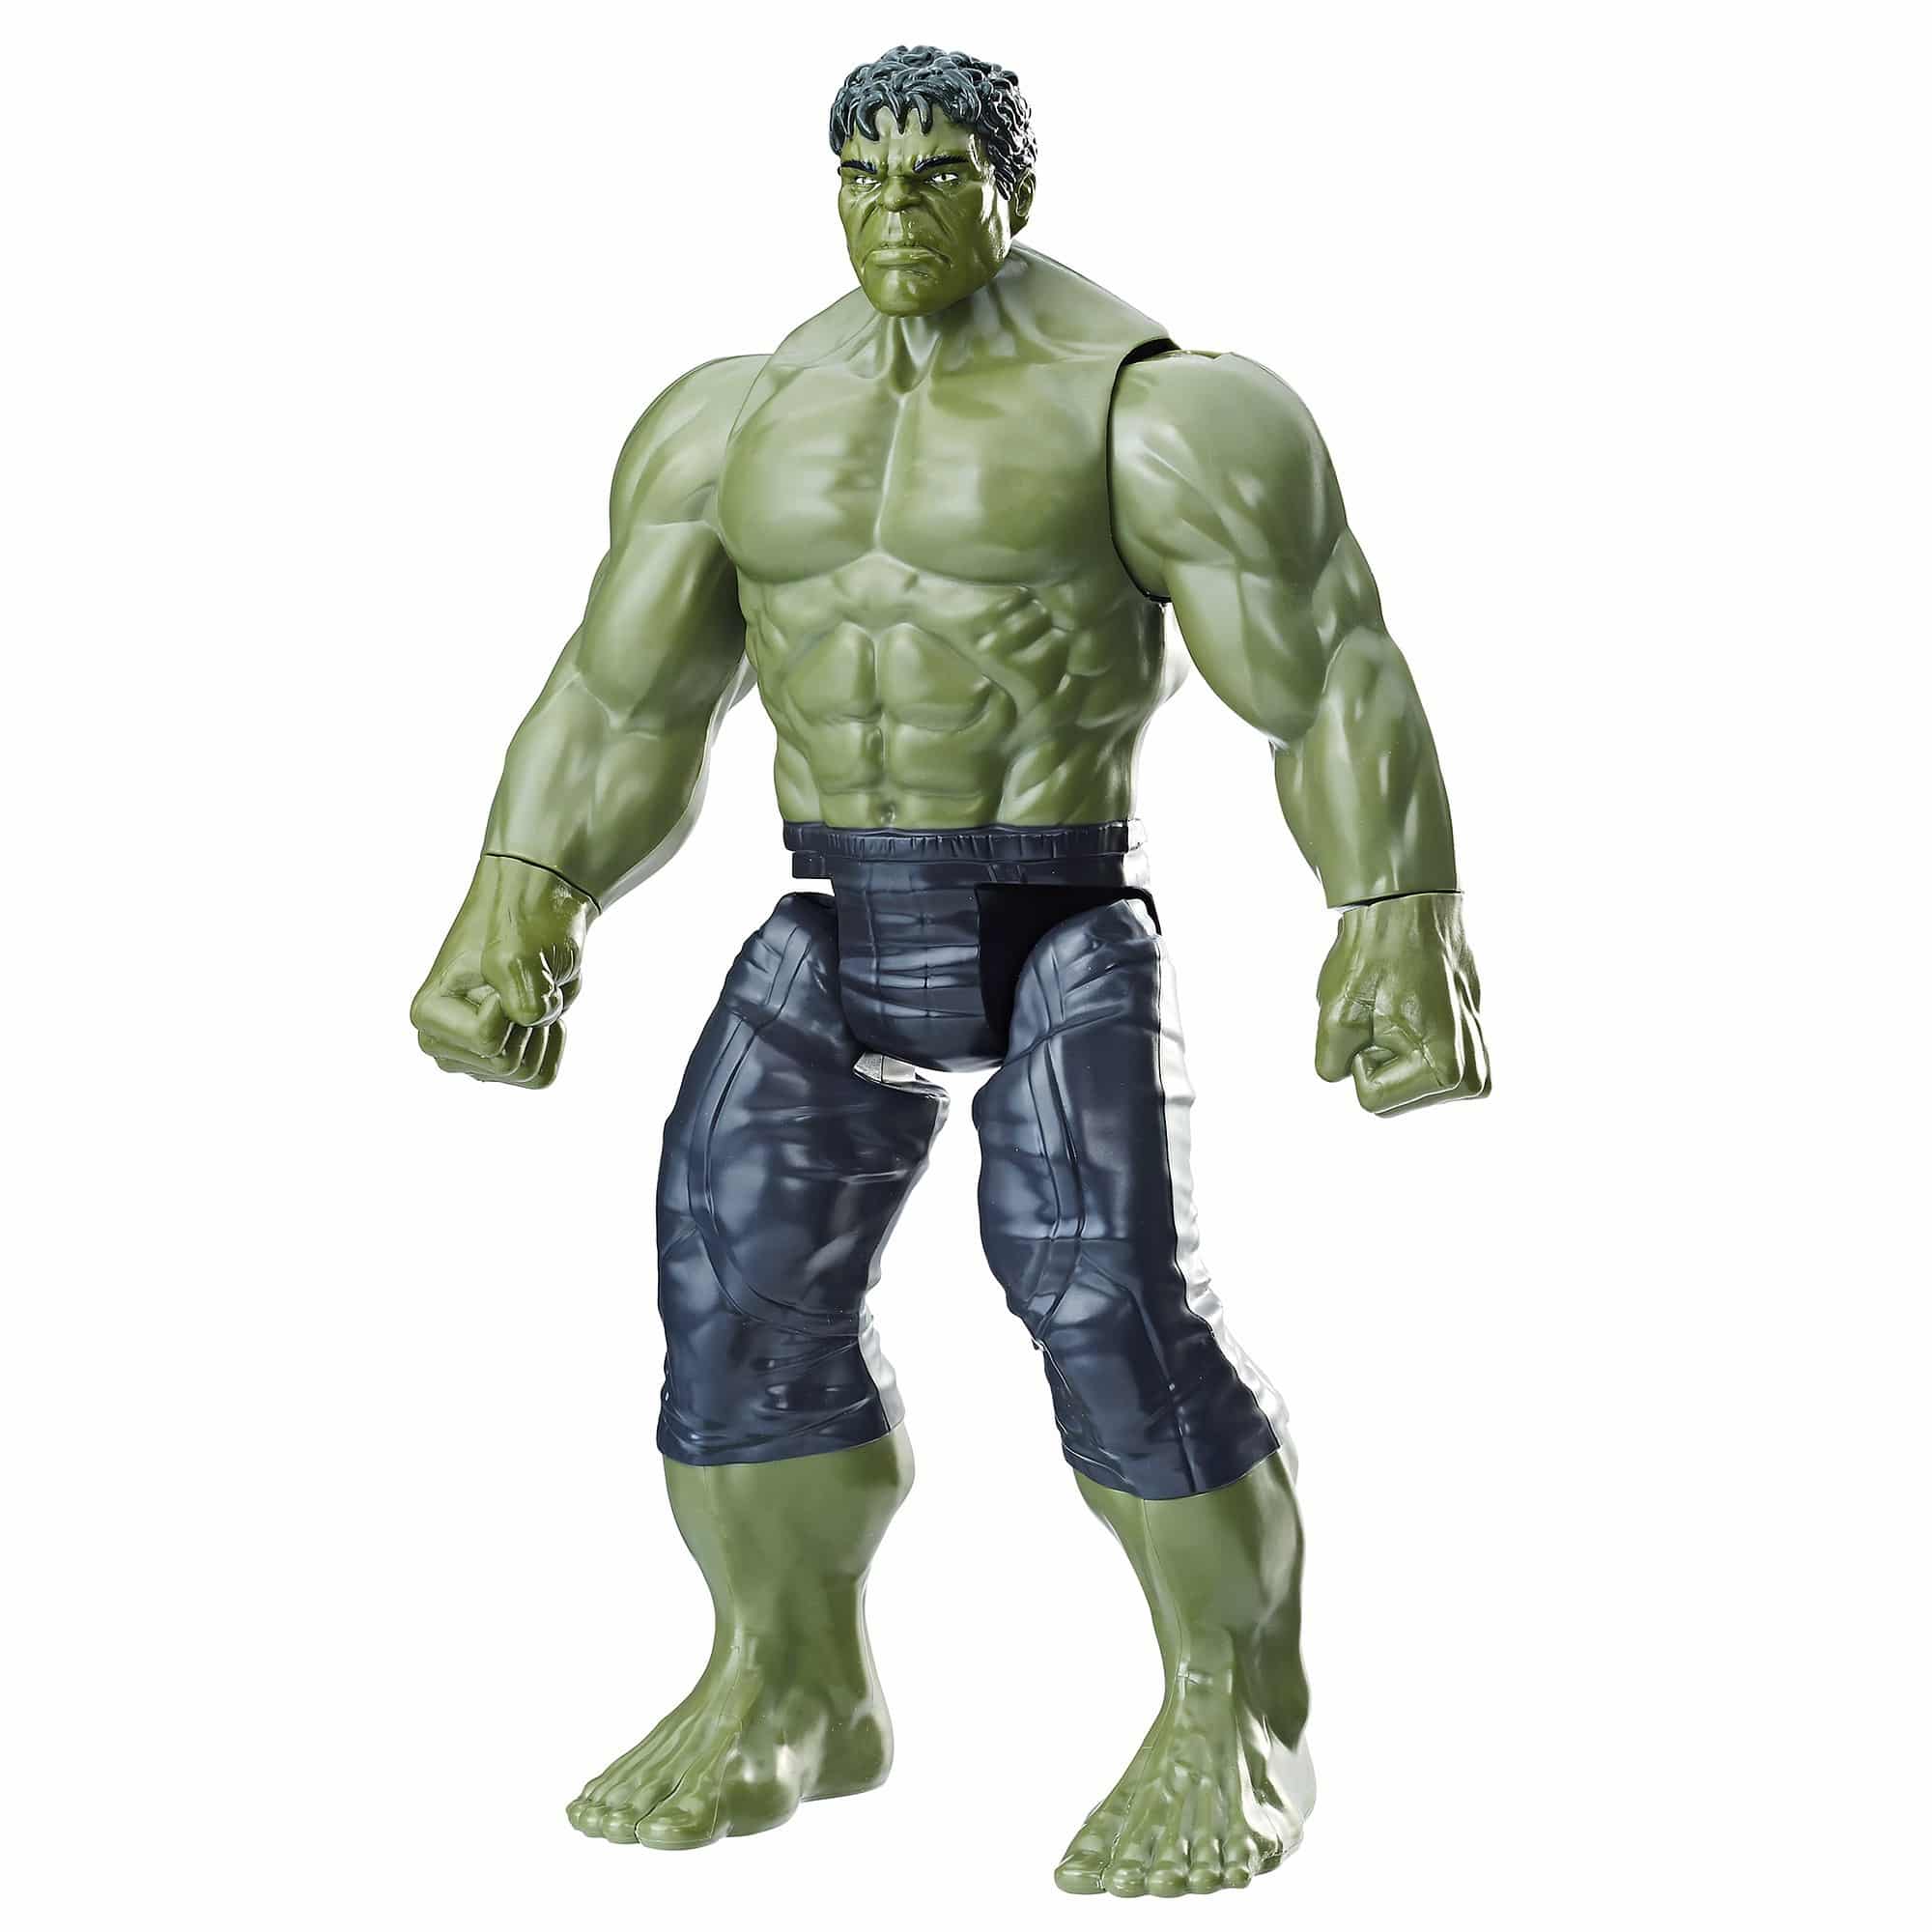 Marvel Avengers - Titan Hero Series - 30cm Hulk Figure